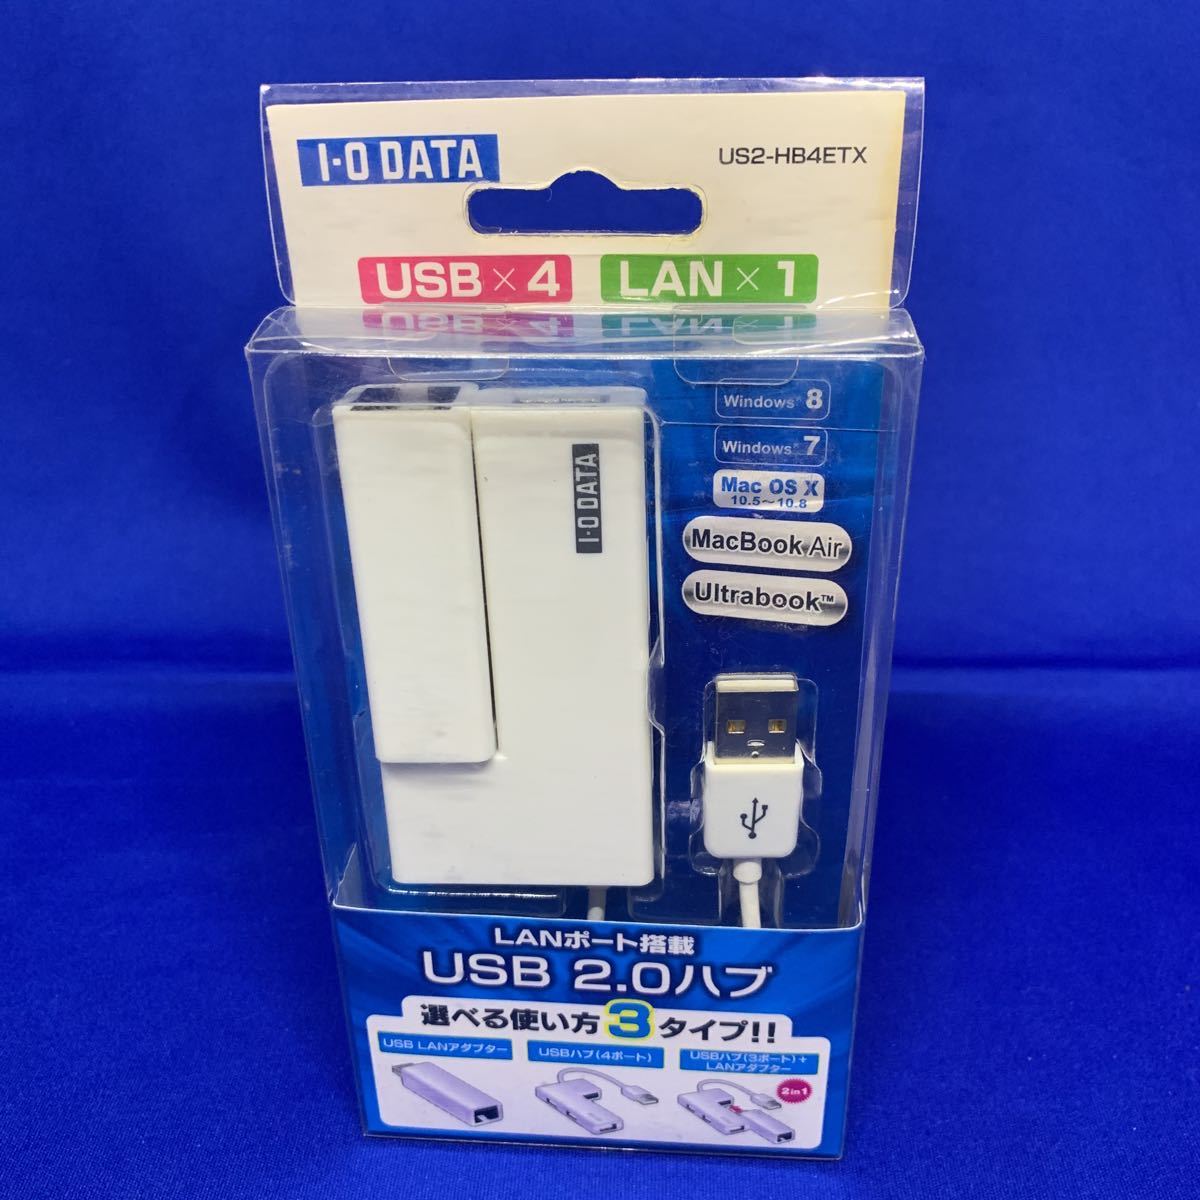 Z9421 I-O DATA LANアダプター搭載USB 2.0ハブ US2-HB4ETX_画像1